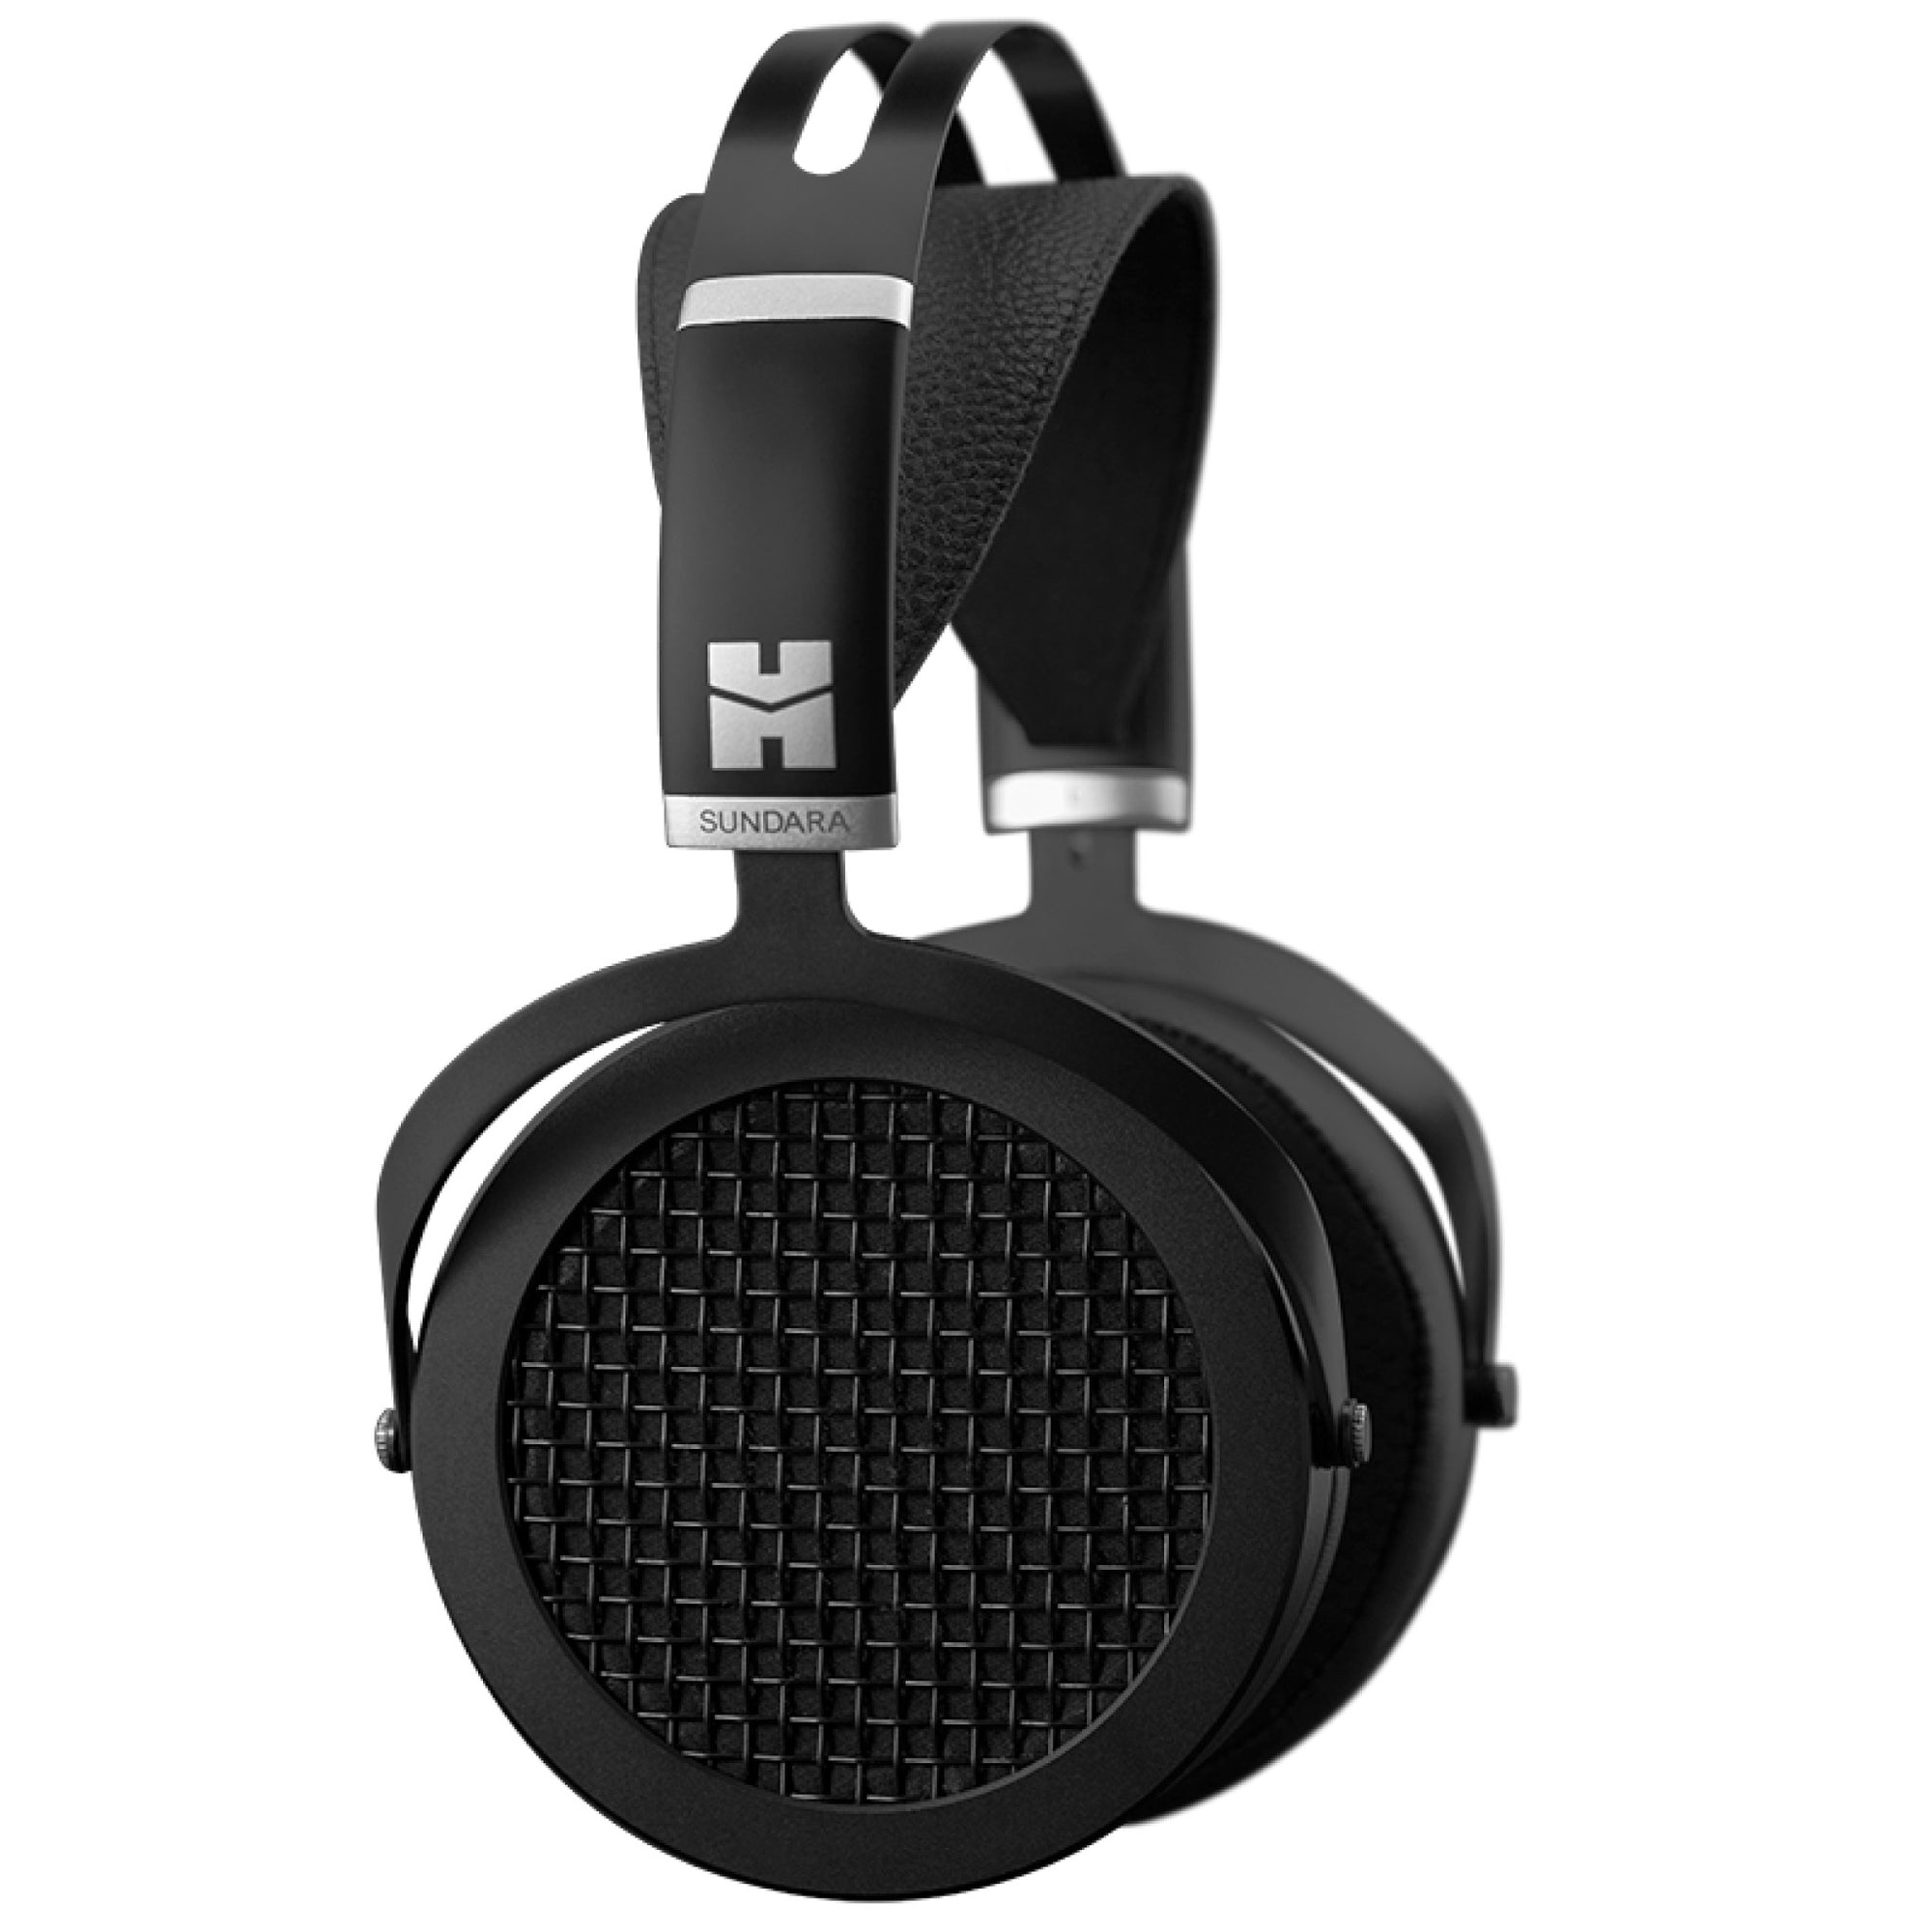 HIFIMAN SUNDARA Over-ear Full-size Planar Magnetic Headphones - Gears For Ears